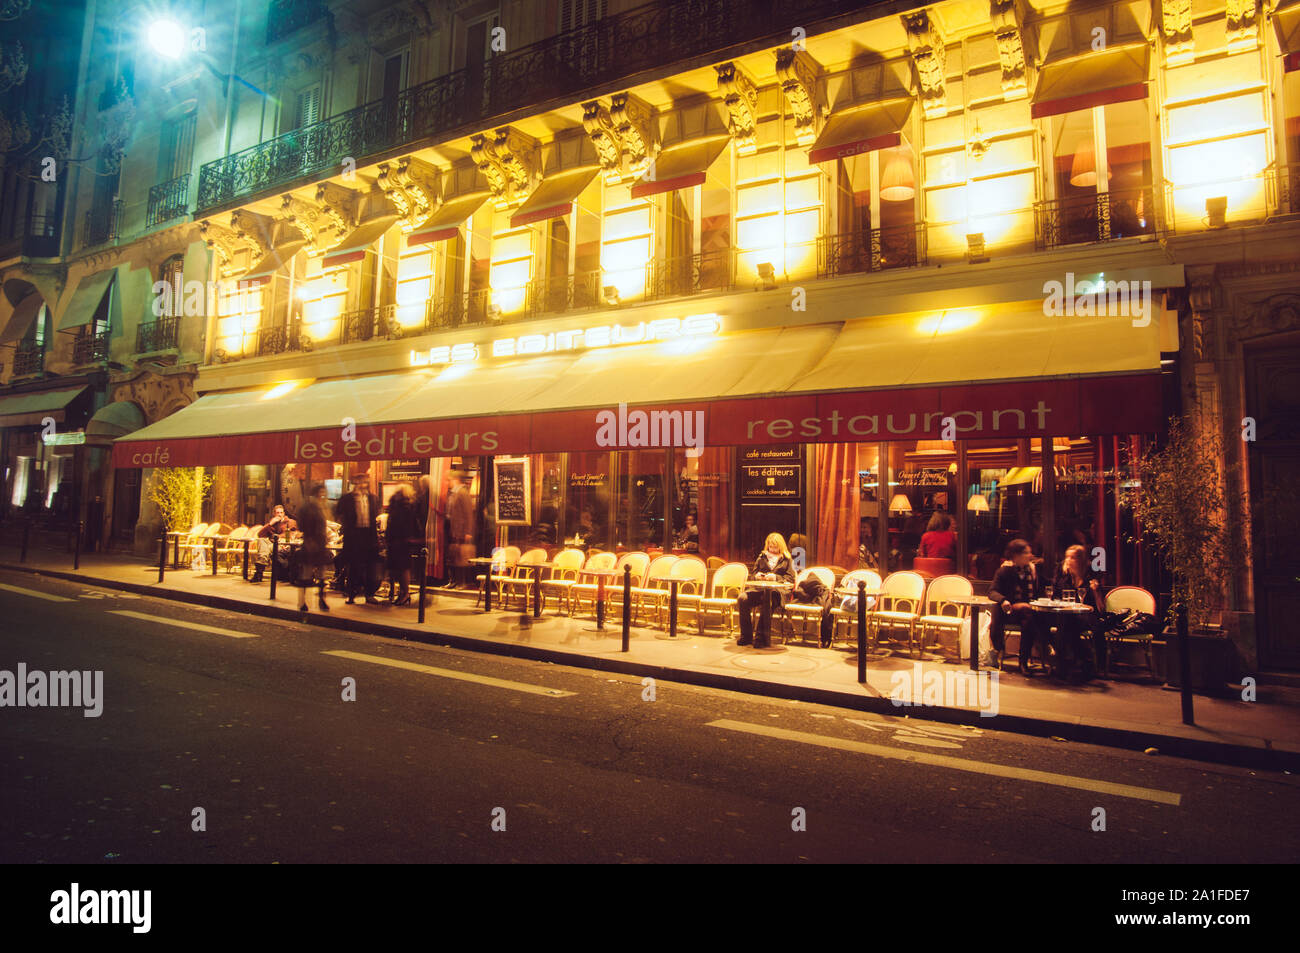 Dining paris piano bar hi-res stock photography and images - Alamy